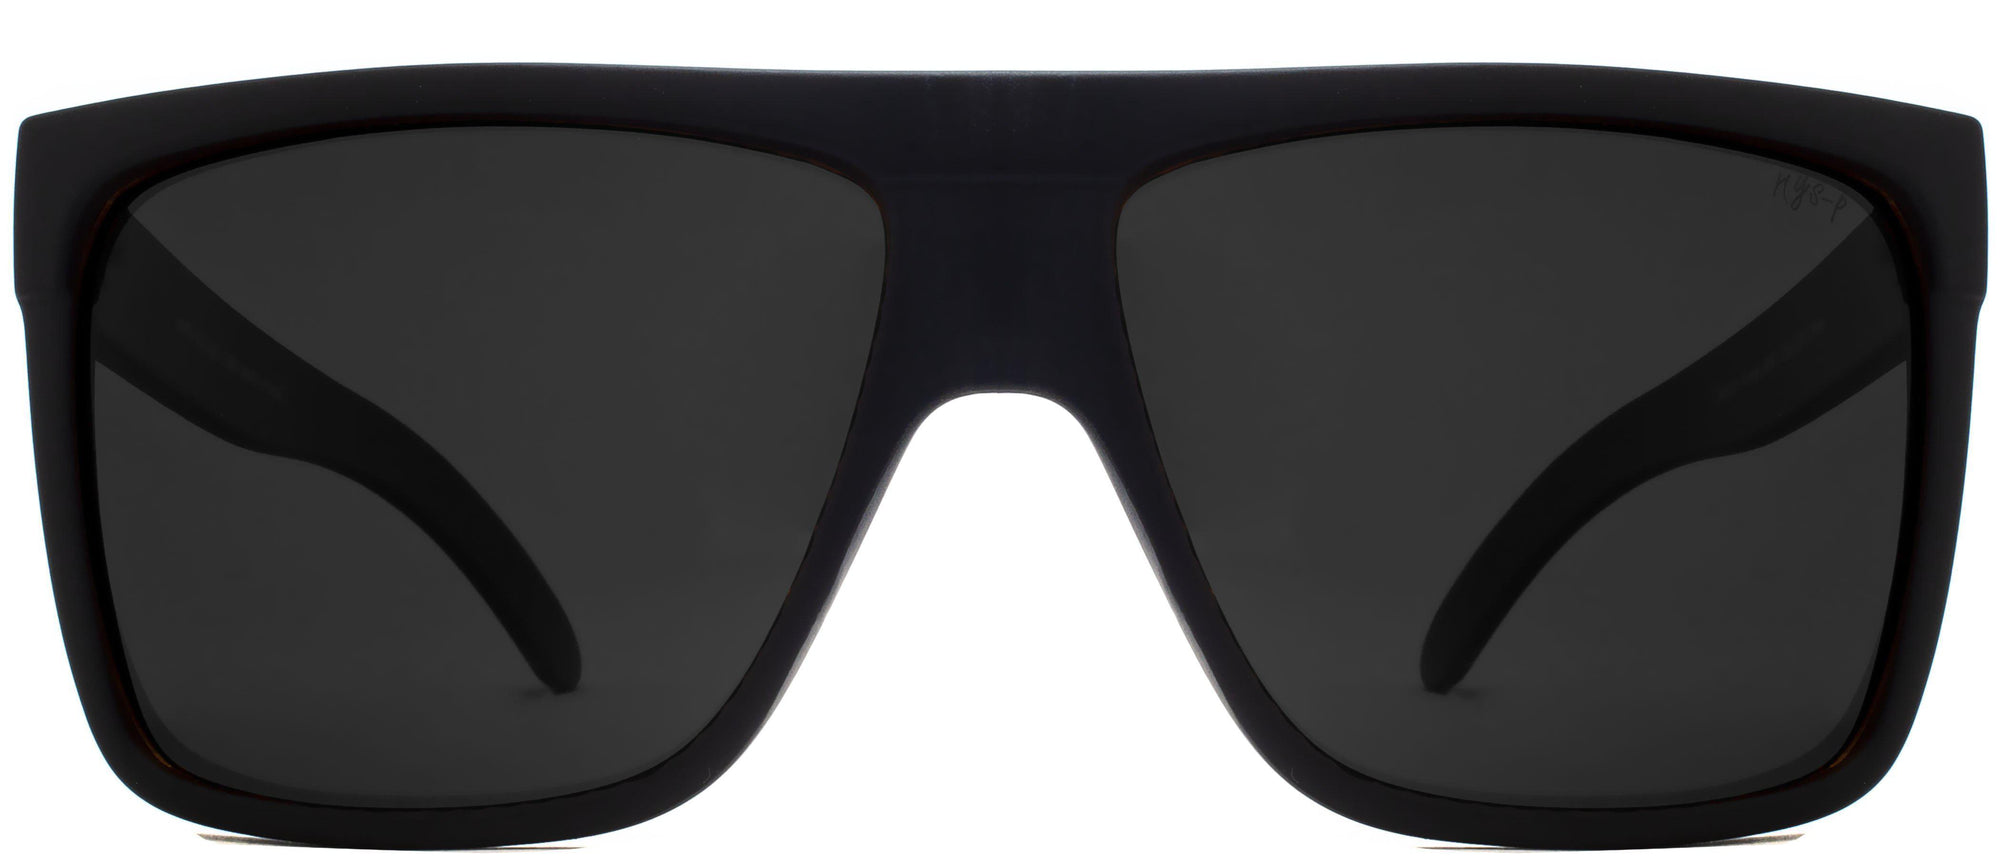 Osborn St. - Sunglasses NYS Collection Eyewear Matte Black/Black